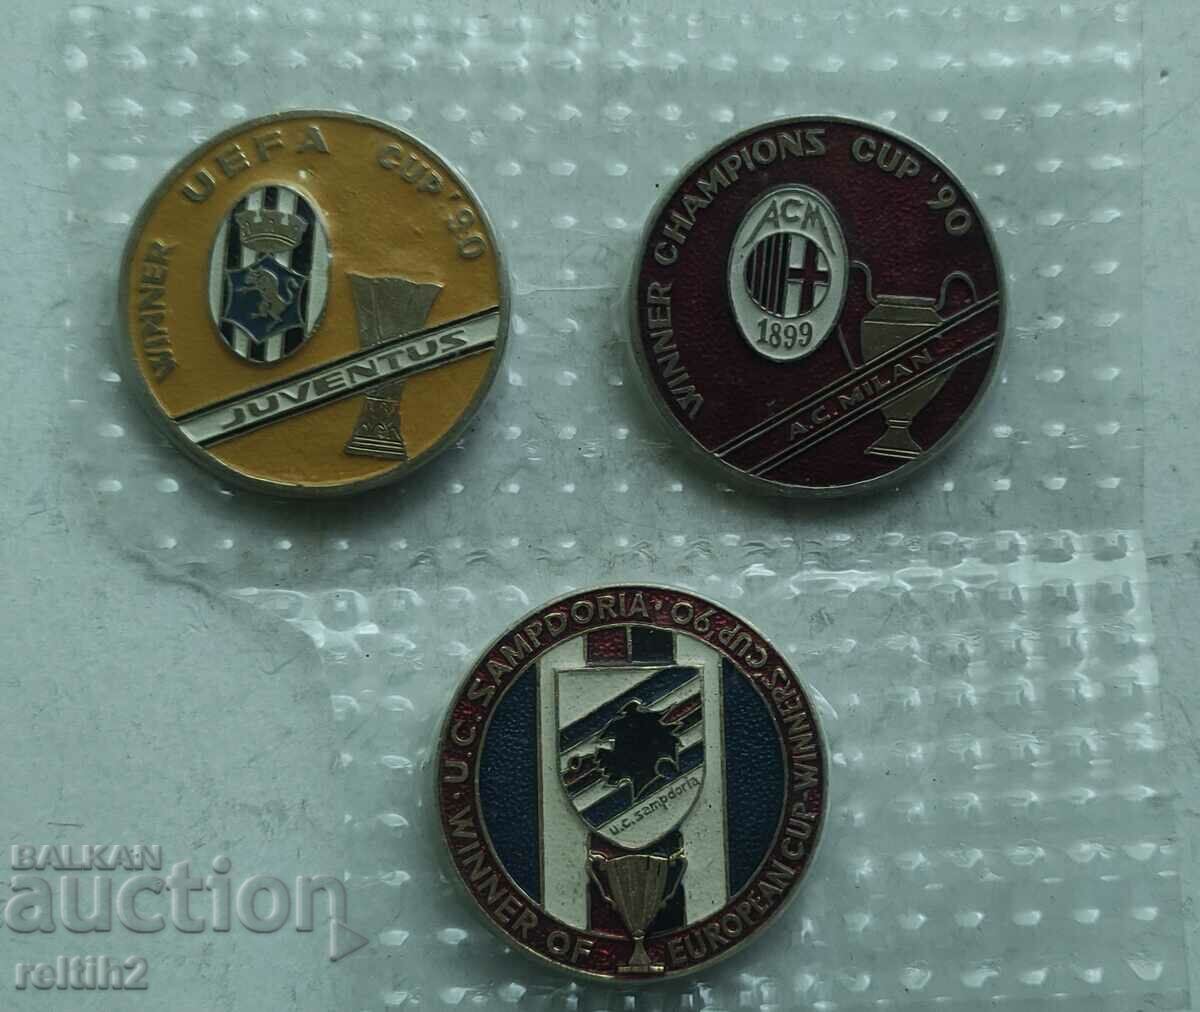 Football badges